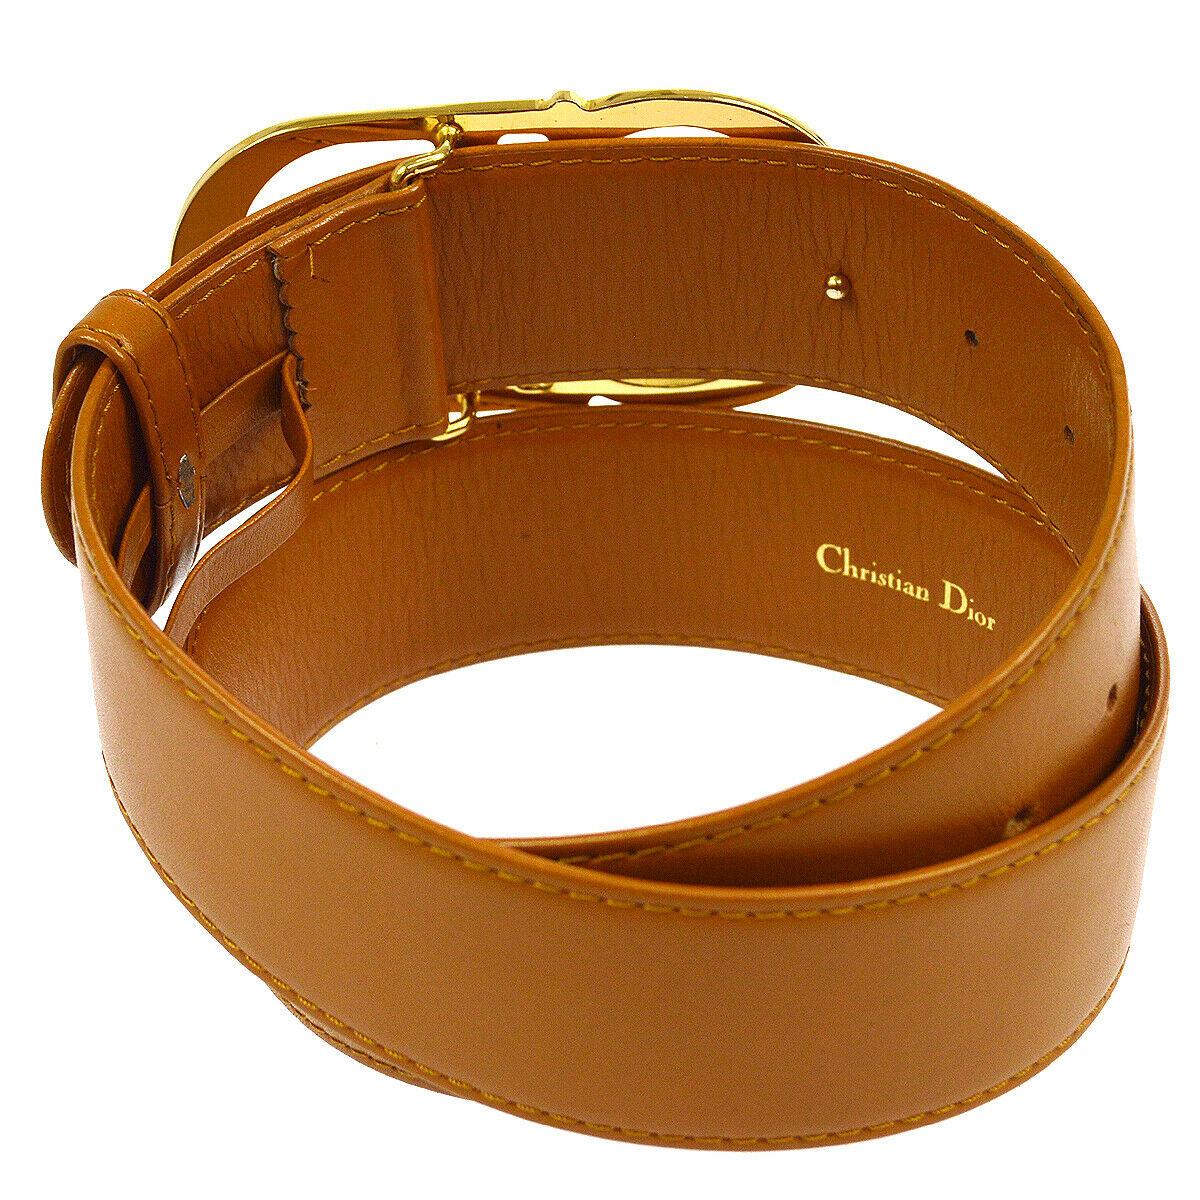 Christian Dior Cognac Leather Gold Large 'CD' Logo Waist Belt

Leather
Metal
Gold tone
Peg closure
Width 1.75